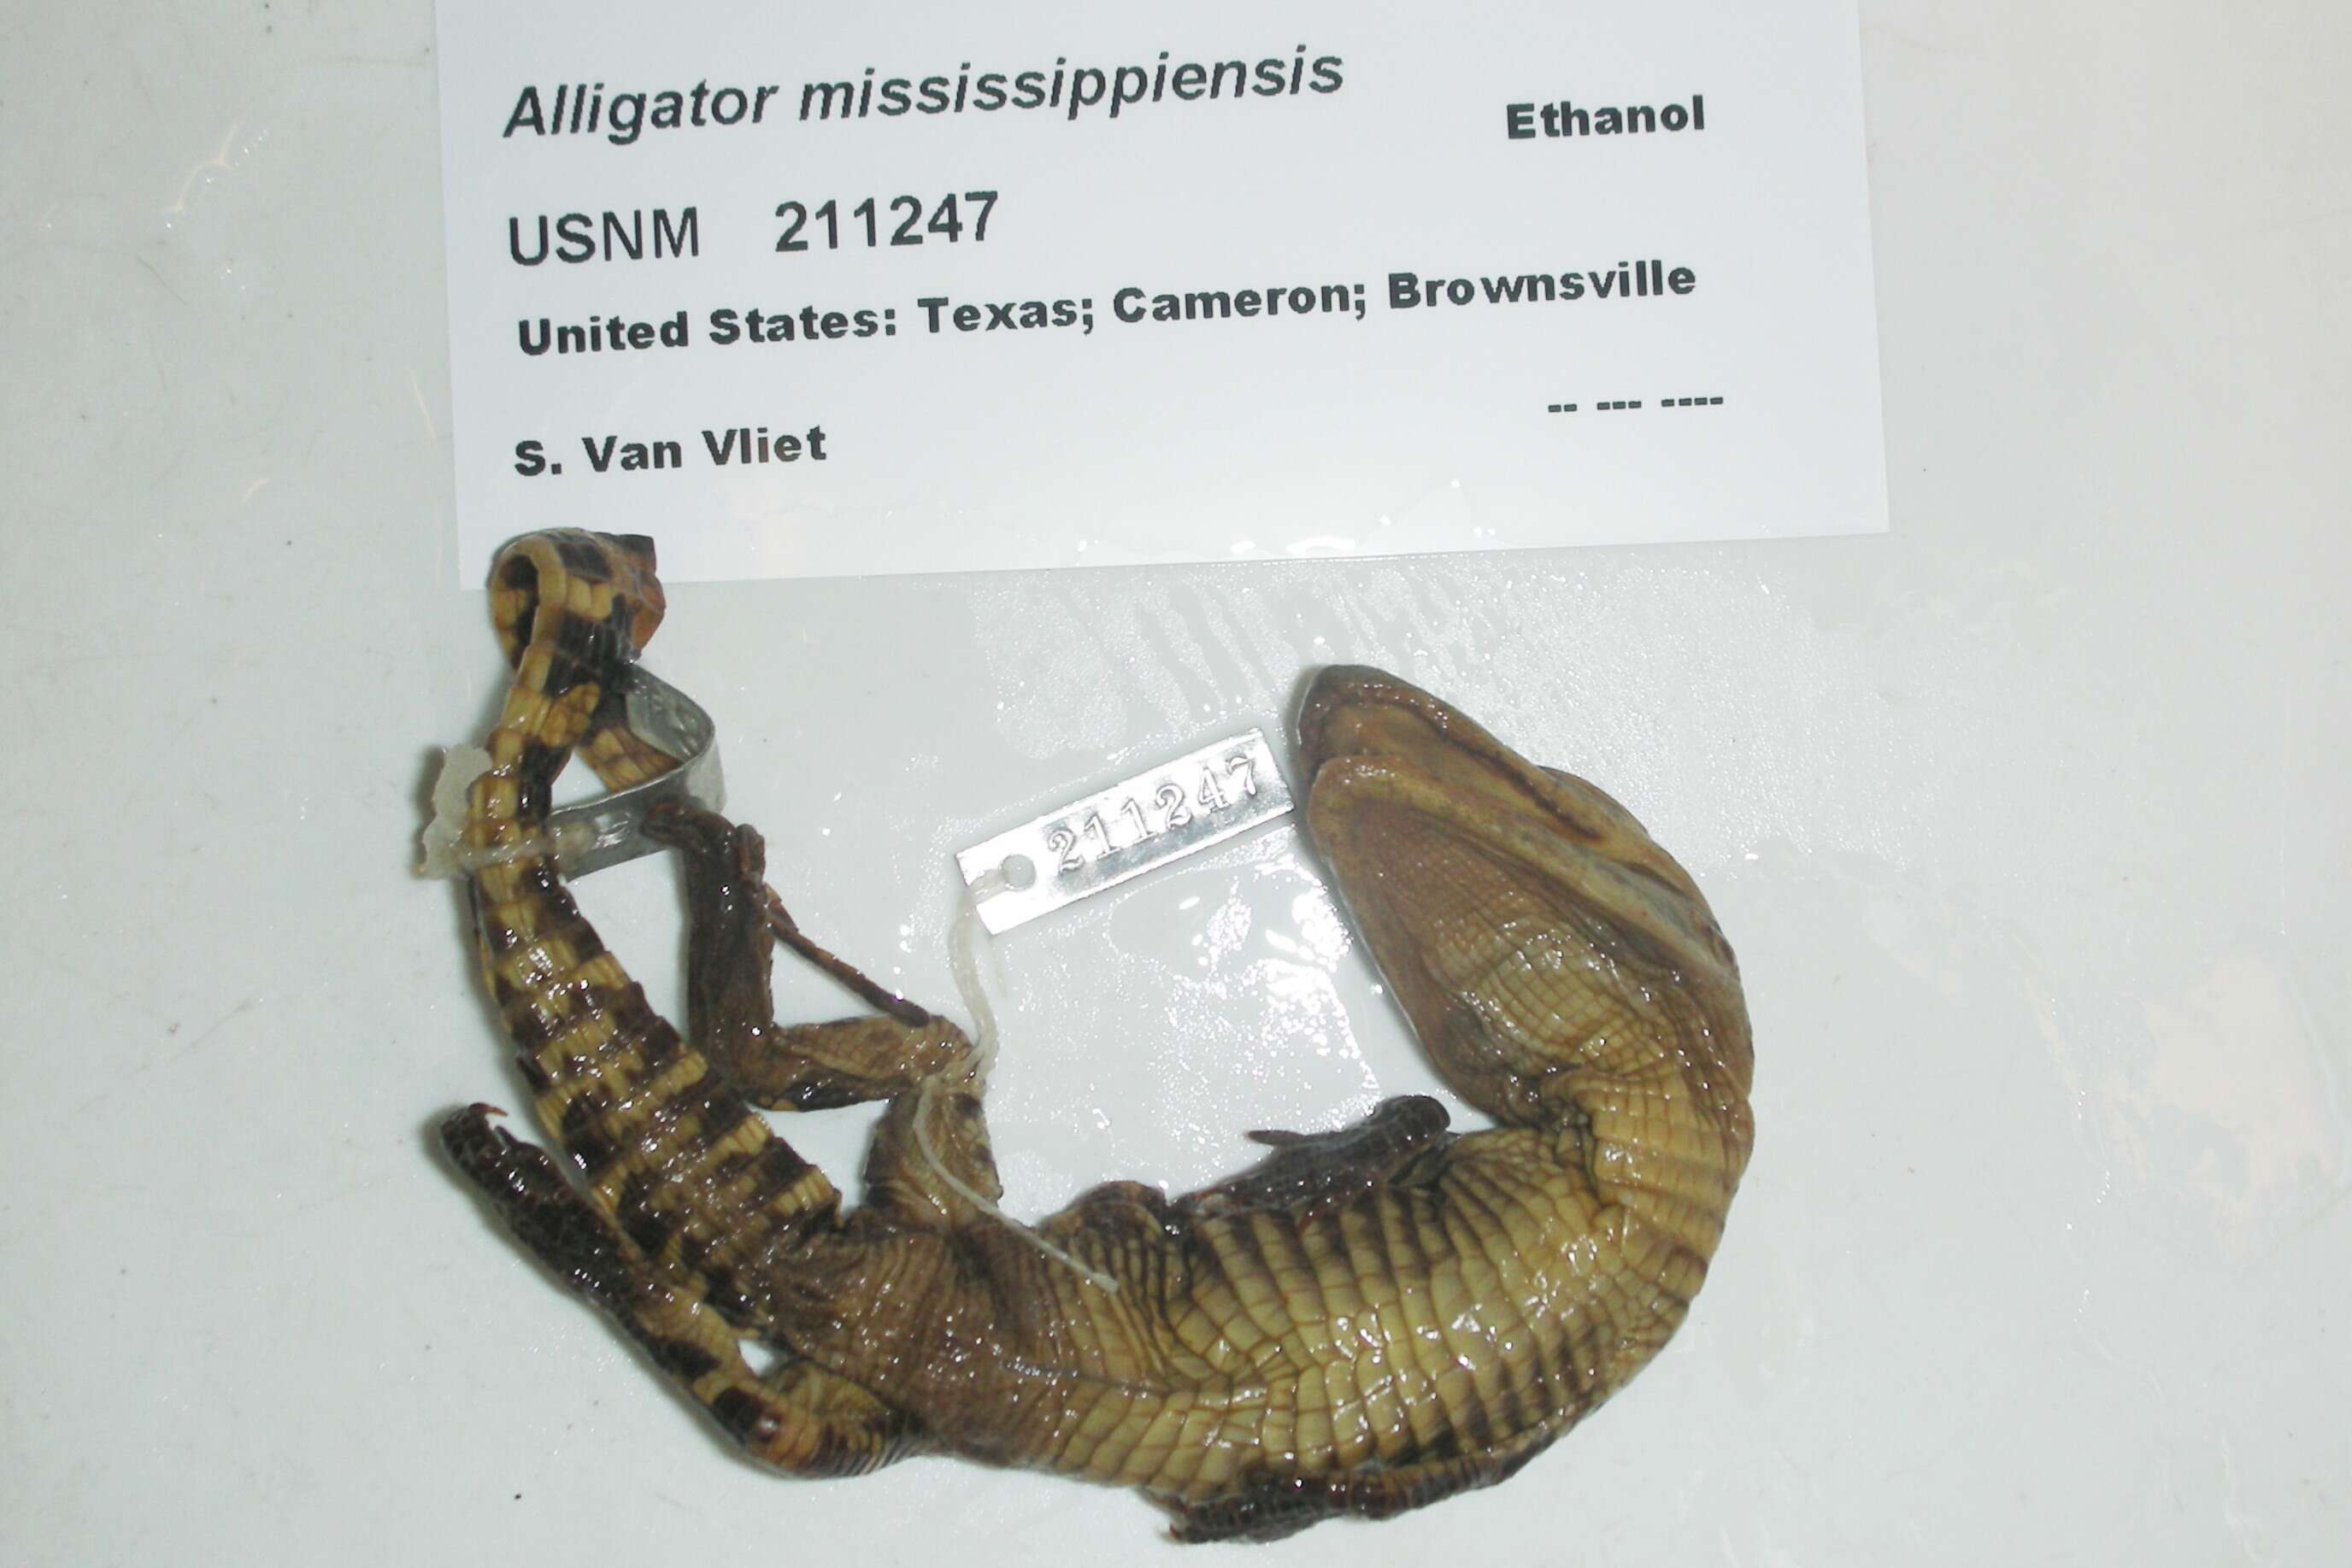 Image of alligators